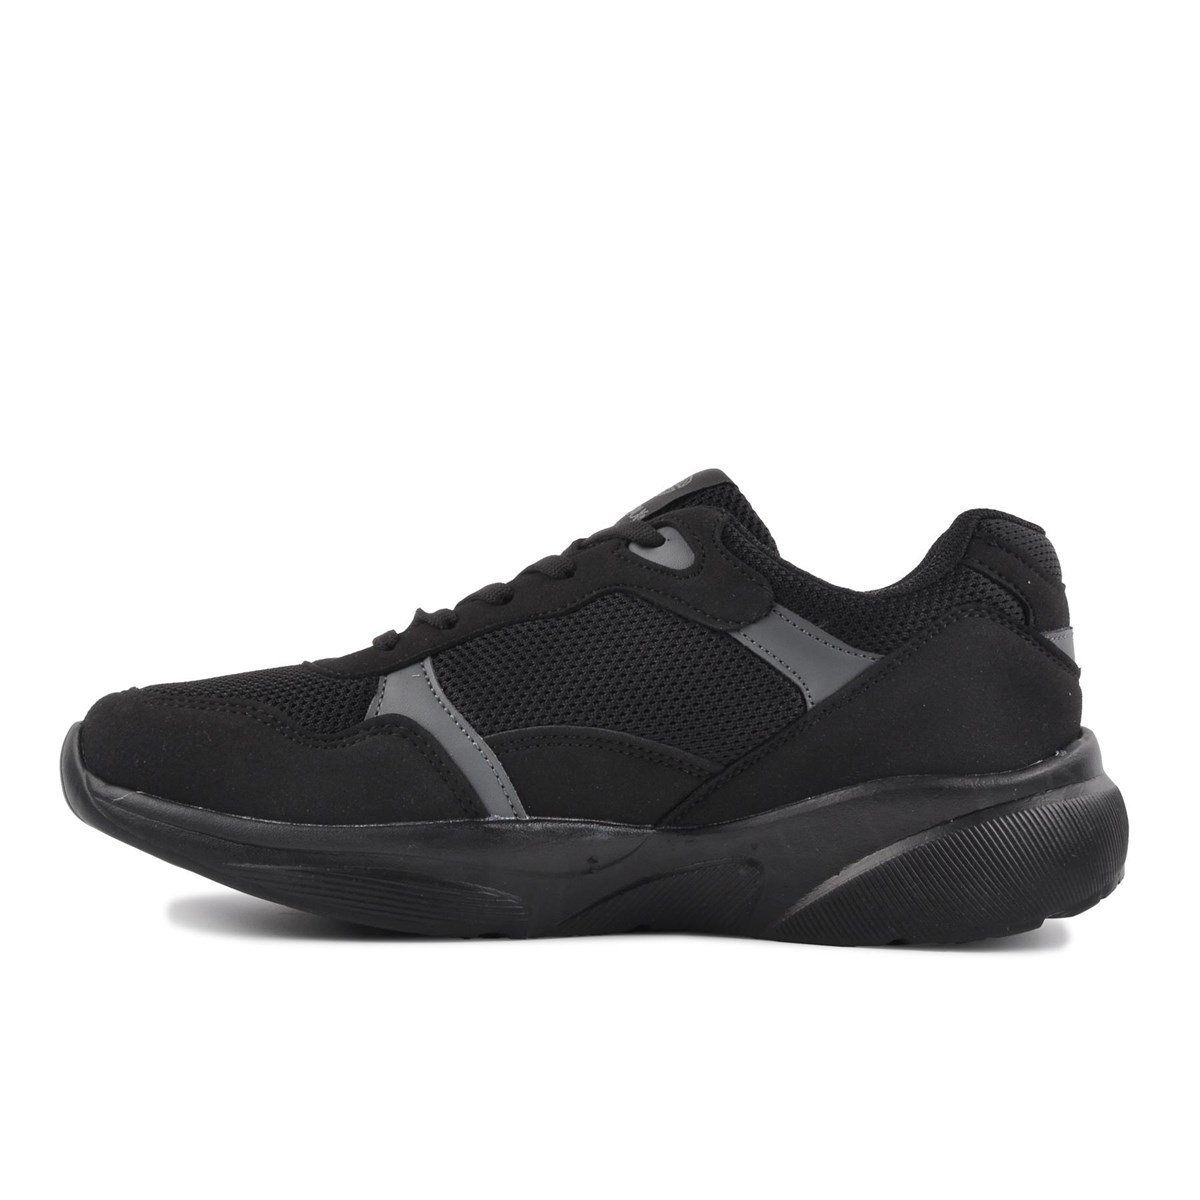 Conpax 5080 Siyah-Siyah Kadın Spor Ayakkabı - Ayakmod